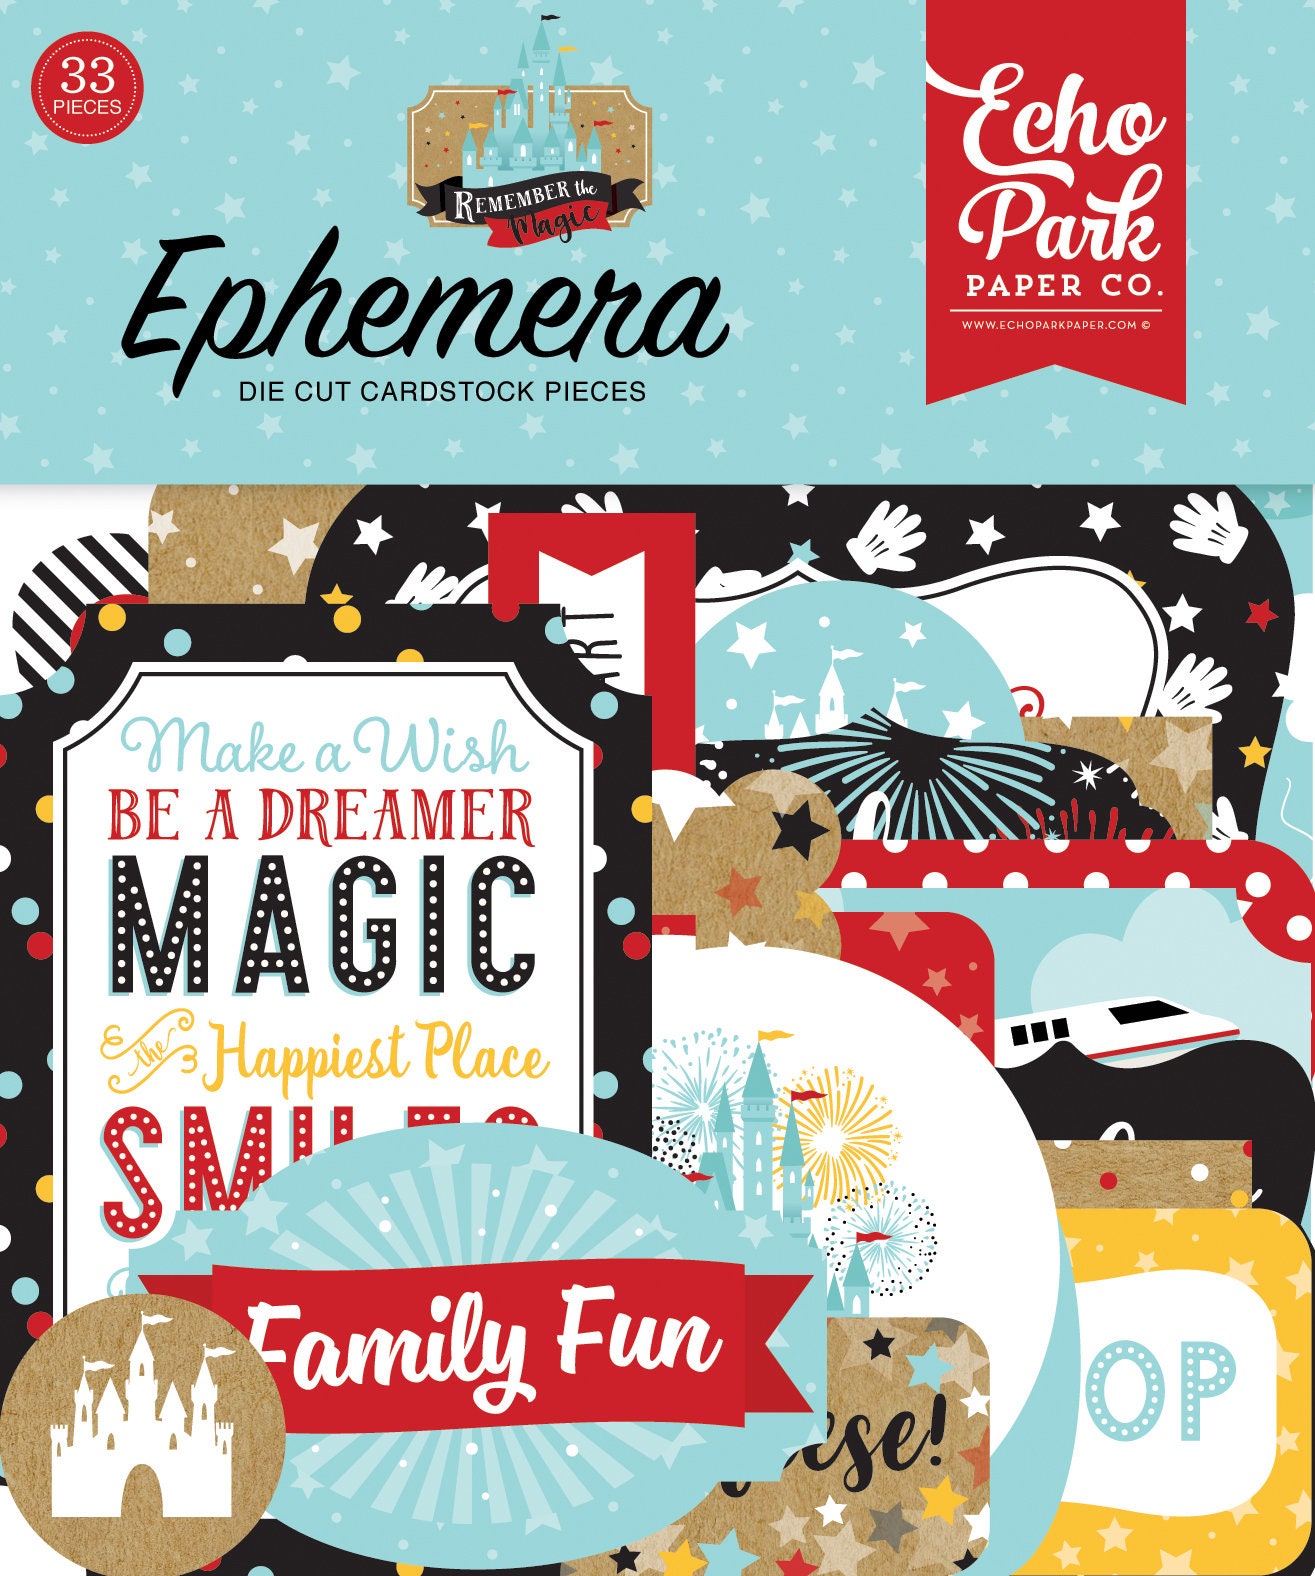 Remember The Magic Element Sticker - Echo Park Paper Co.